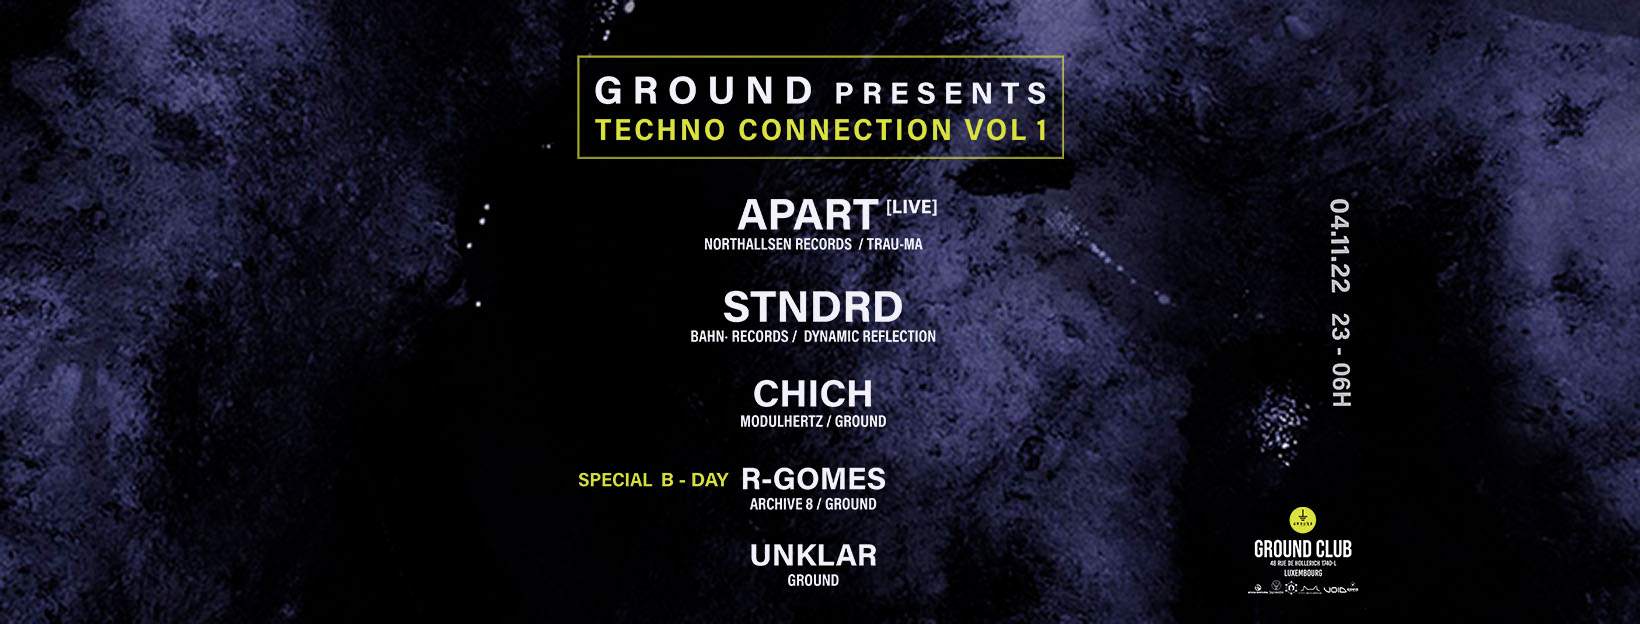 GROUND pres. Techno Connection Vol.1 - フライヤー表